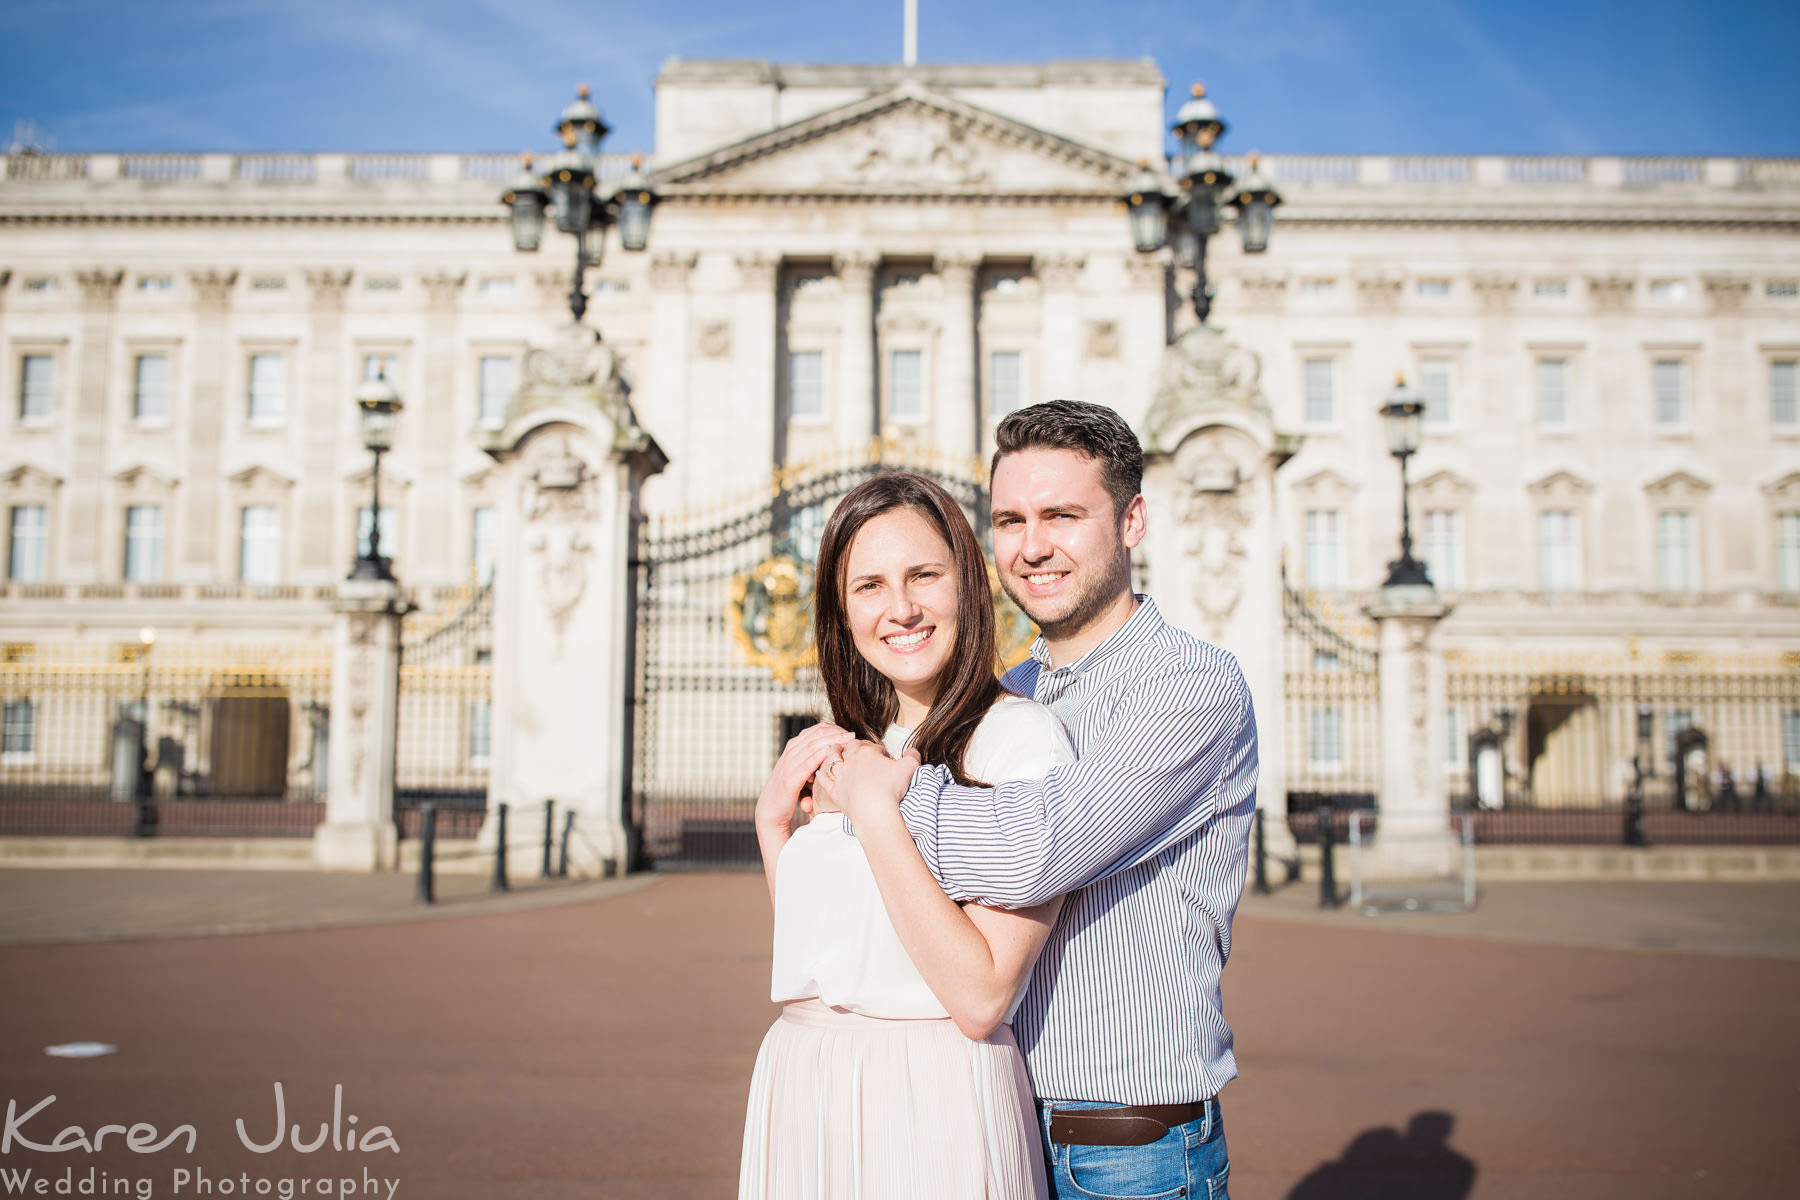 couple portraits outside Buckingham Palace, by Karen Julia Photography